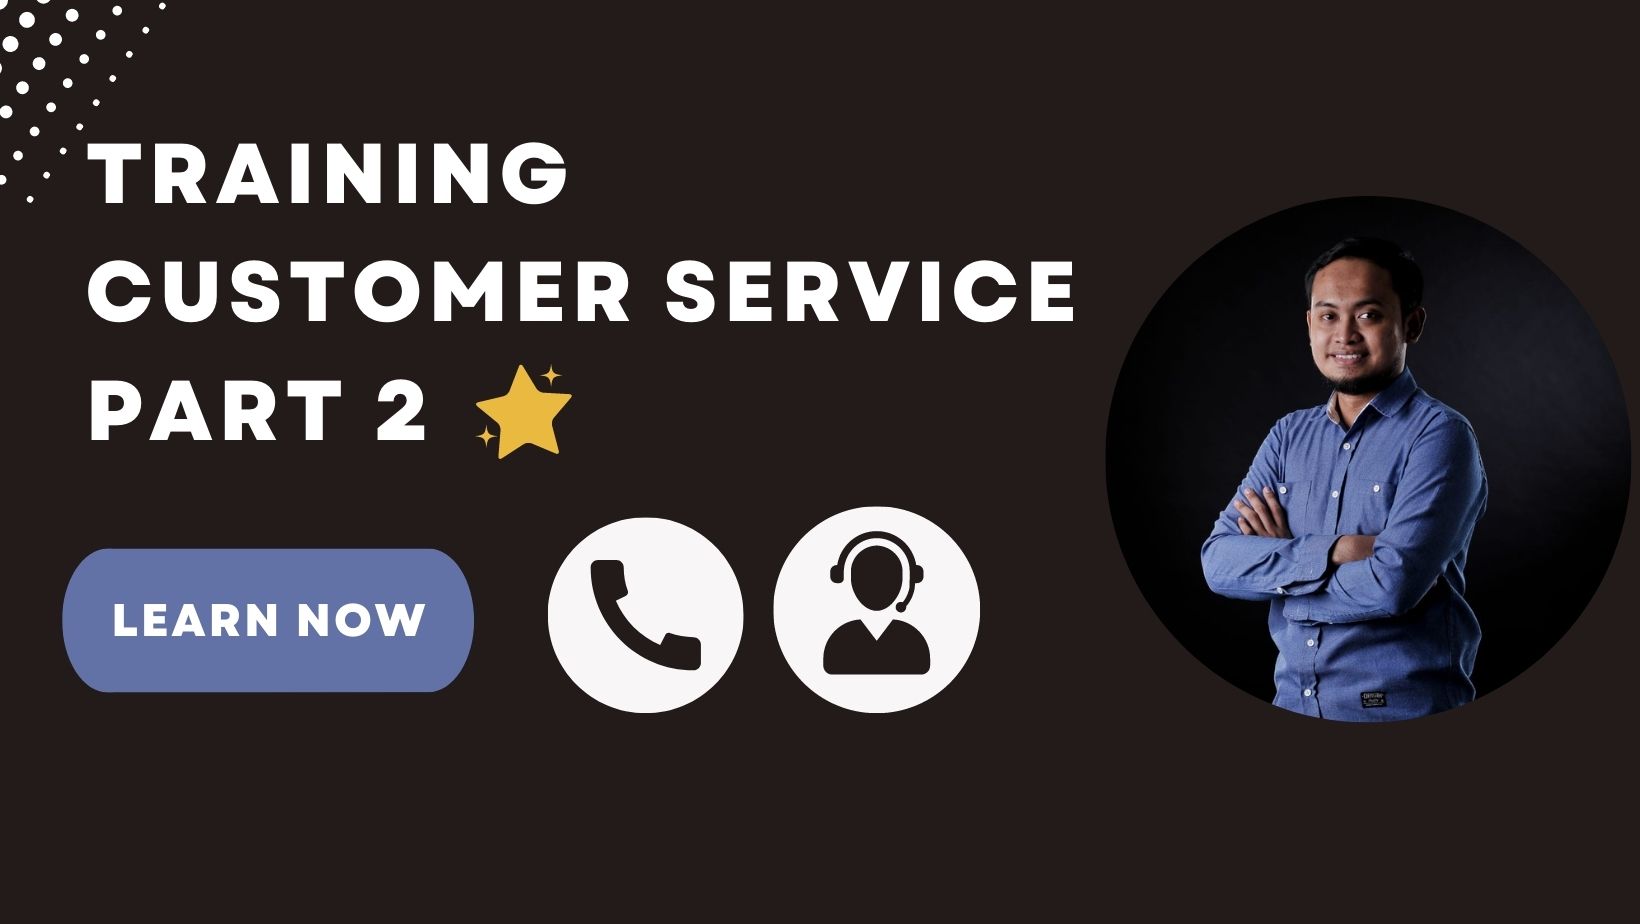 Training Customer Service Part 2